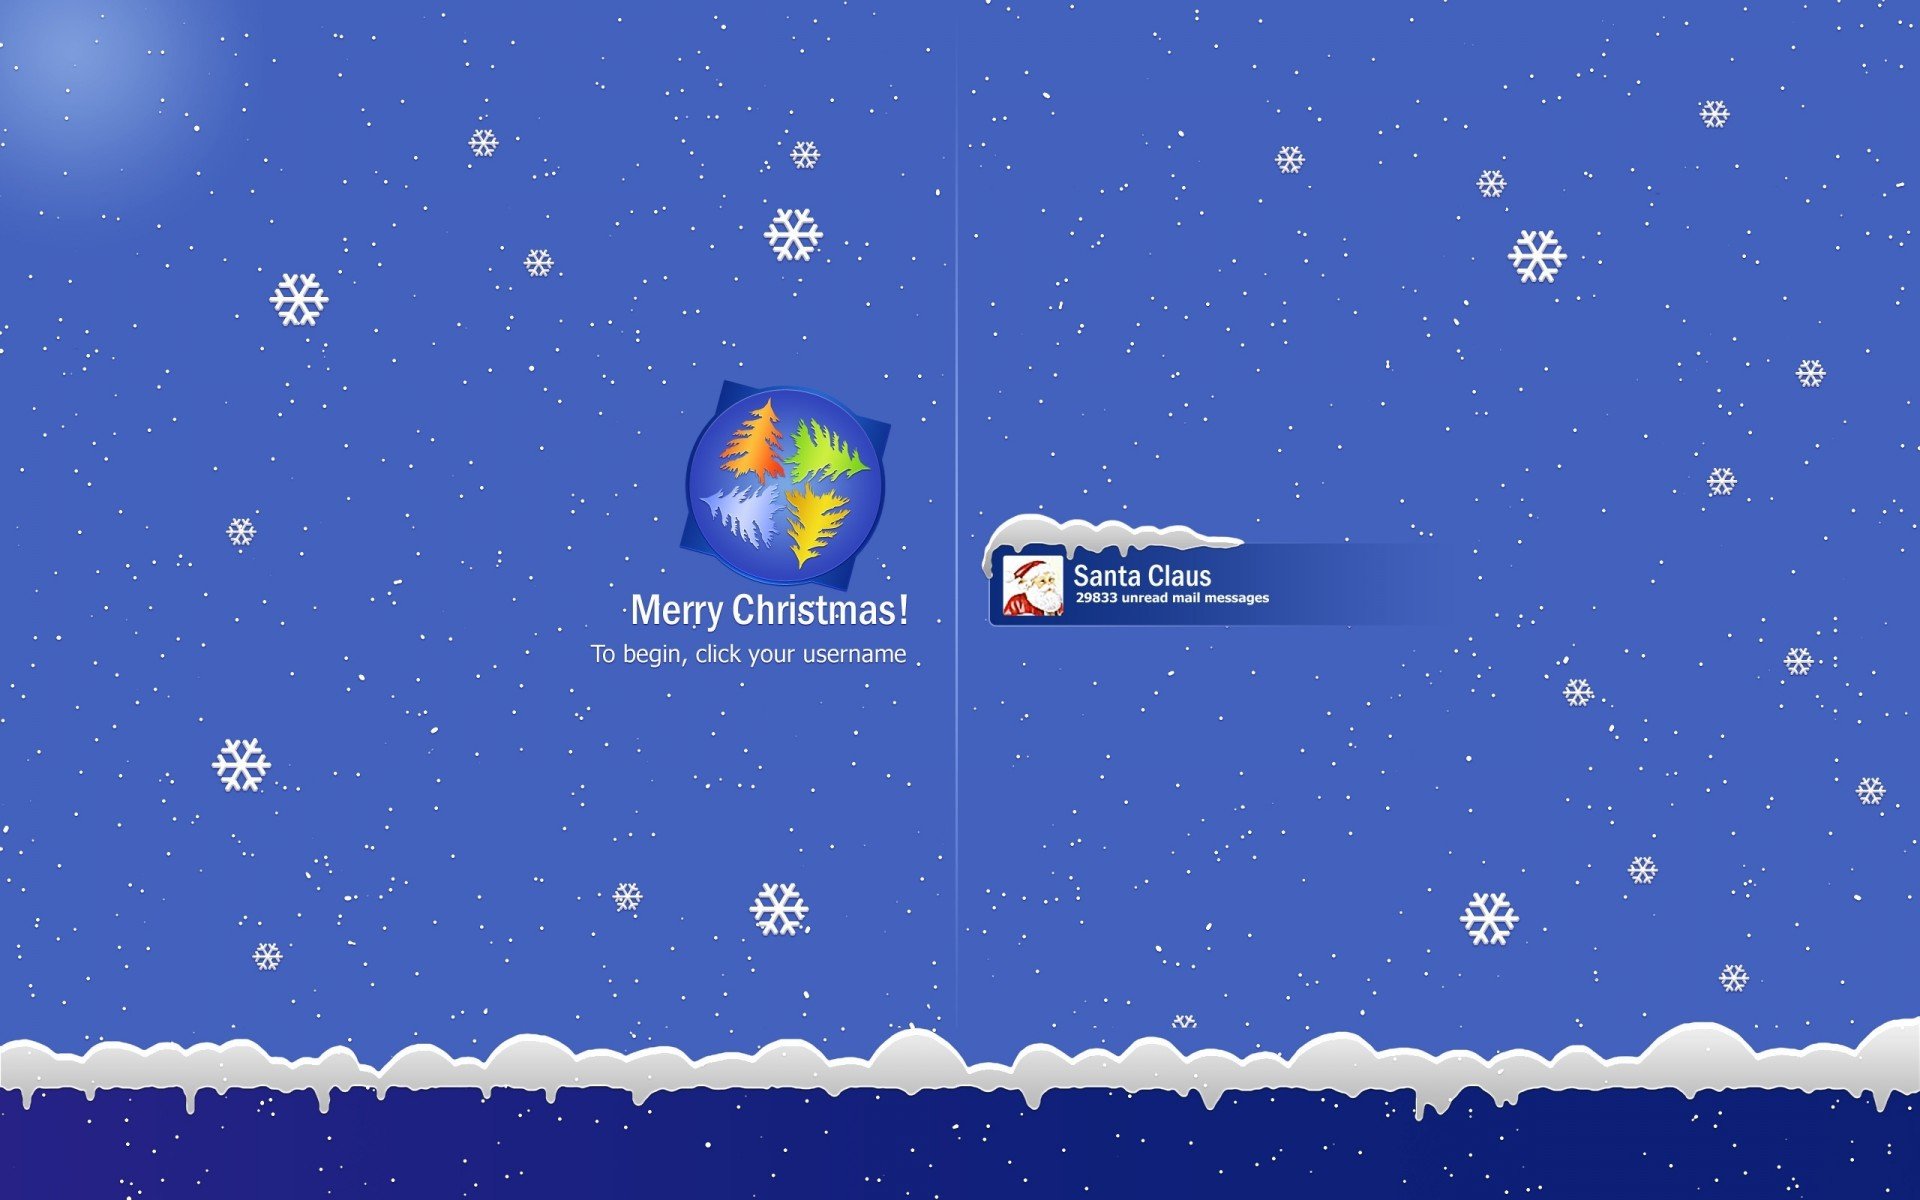 holidays, Christmas, Seasons, Windows, Microsoft, Tech, Computer, Santa, Flakes, Snowing Wallpaper